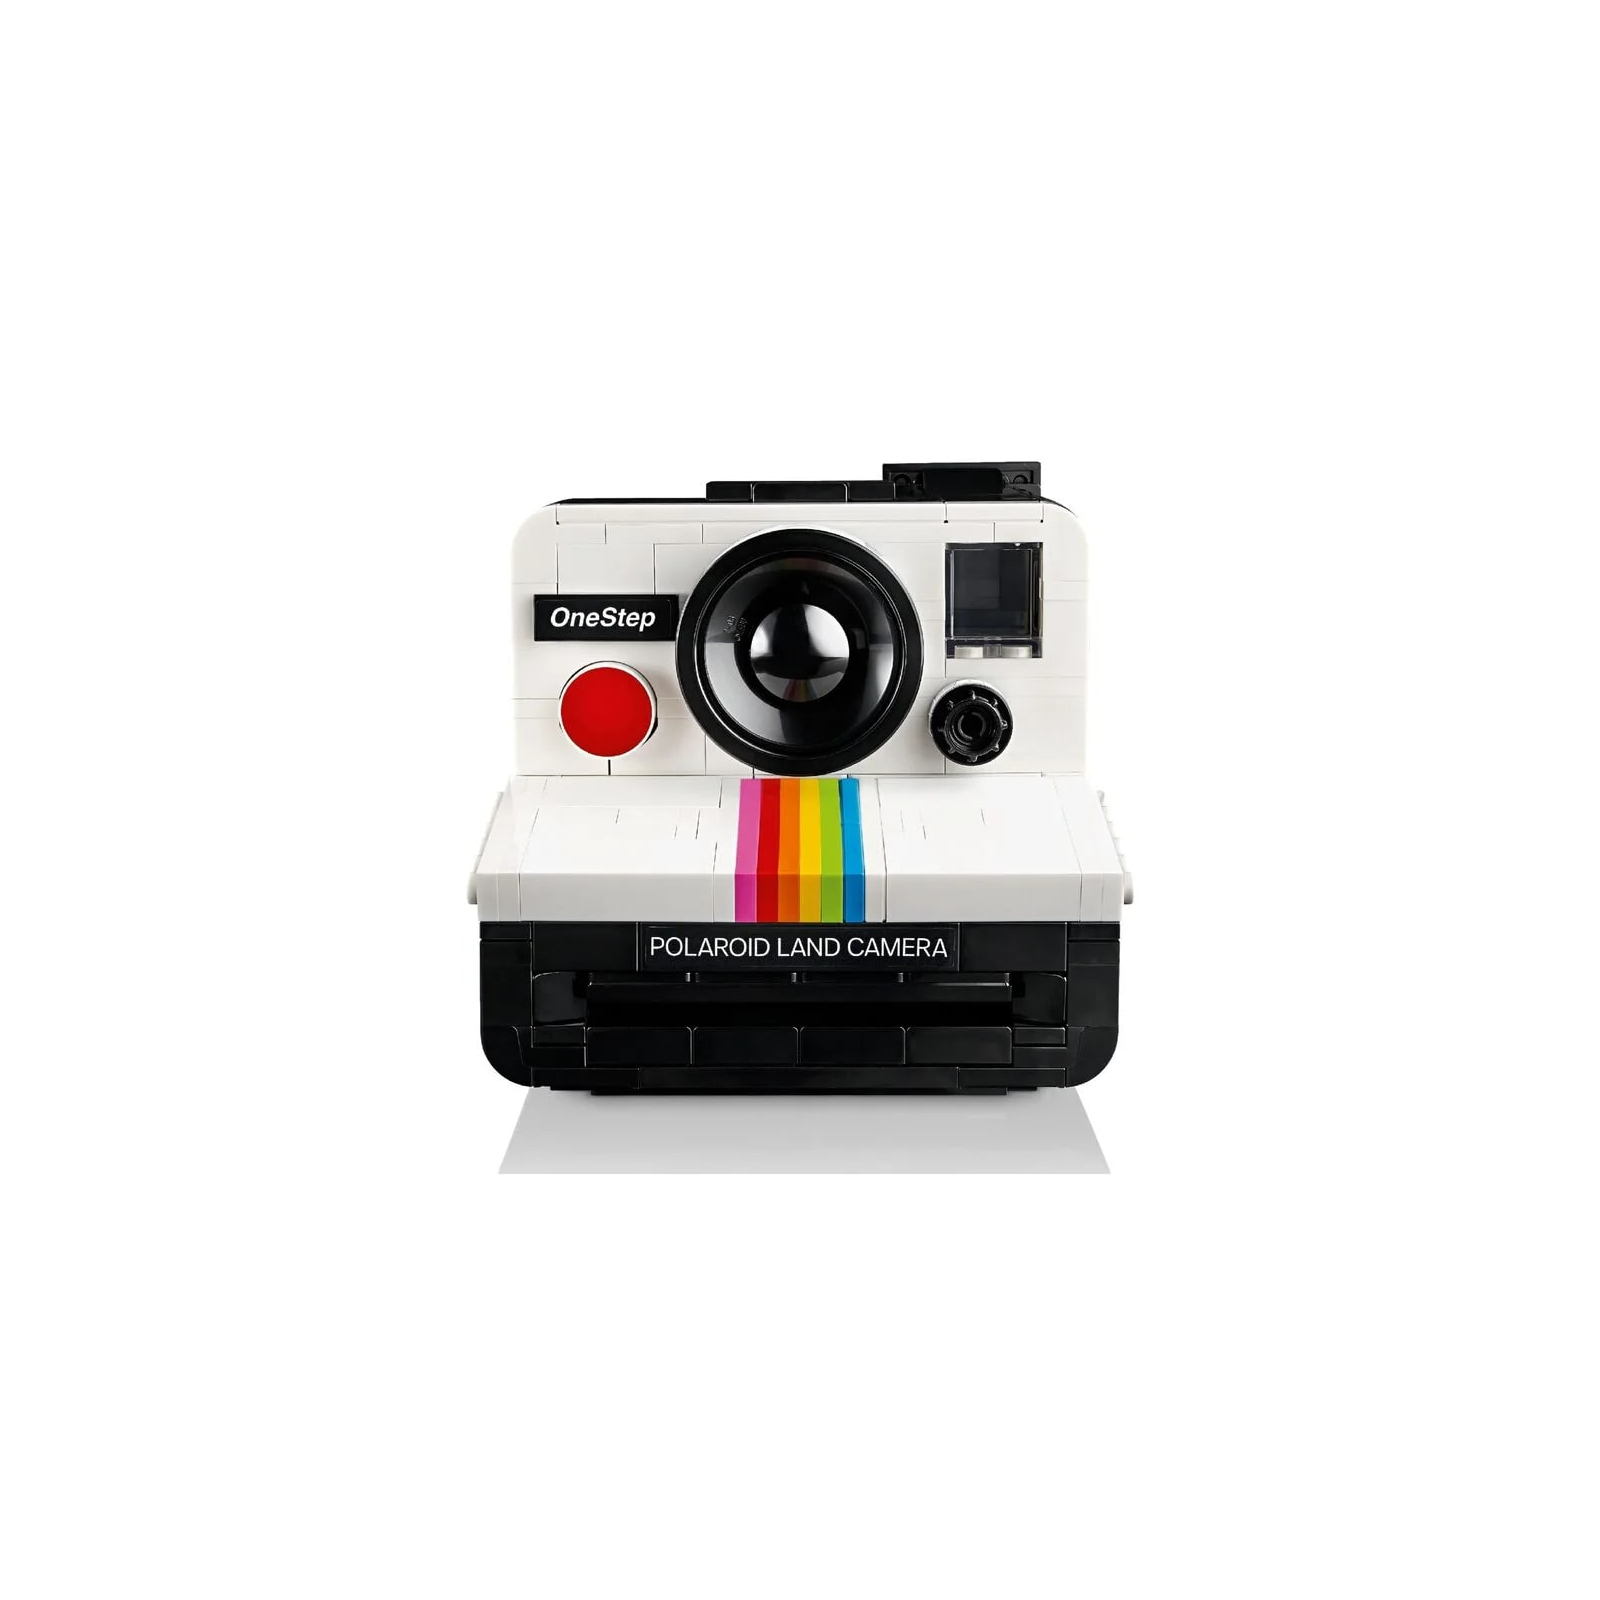 Конструктор LEGO Ideas Фотоапарат Polaroid OneStep SX-70 516 деталей (21345-) зображення 8